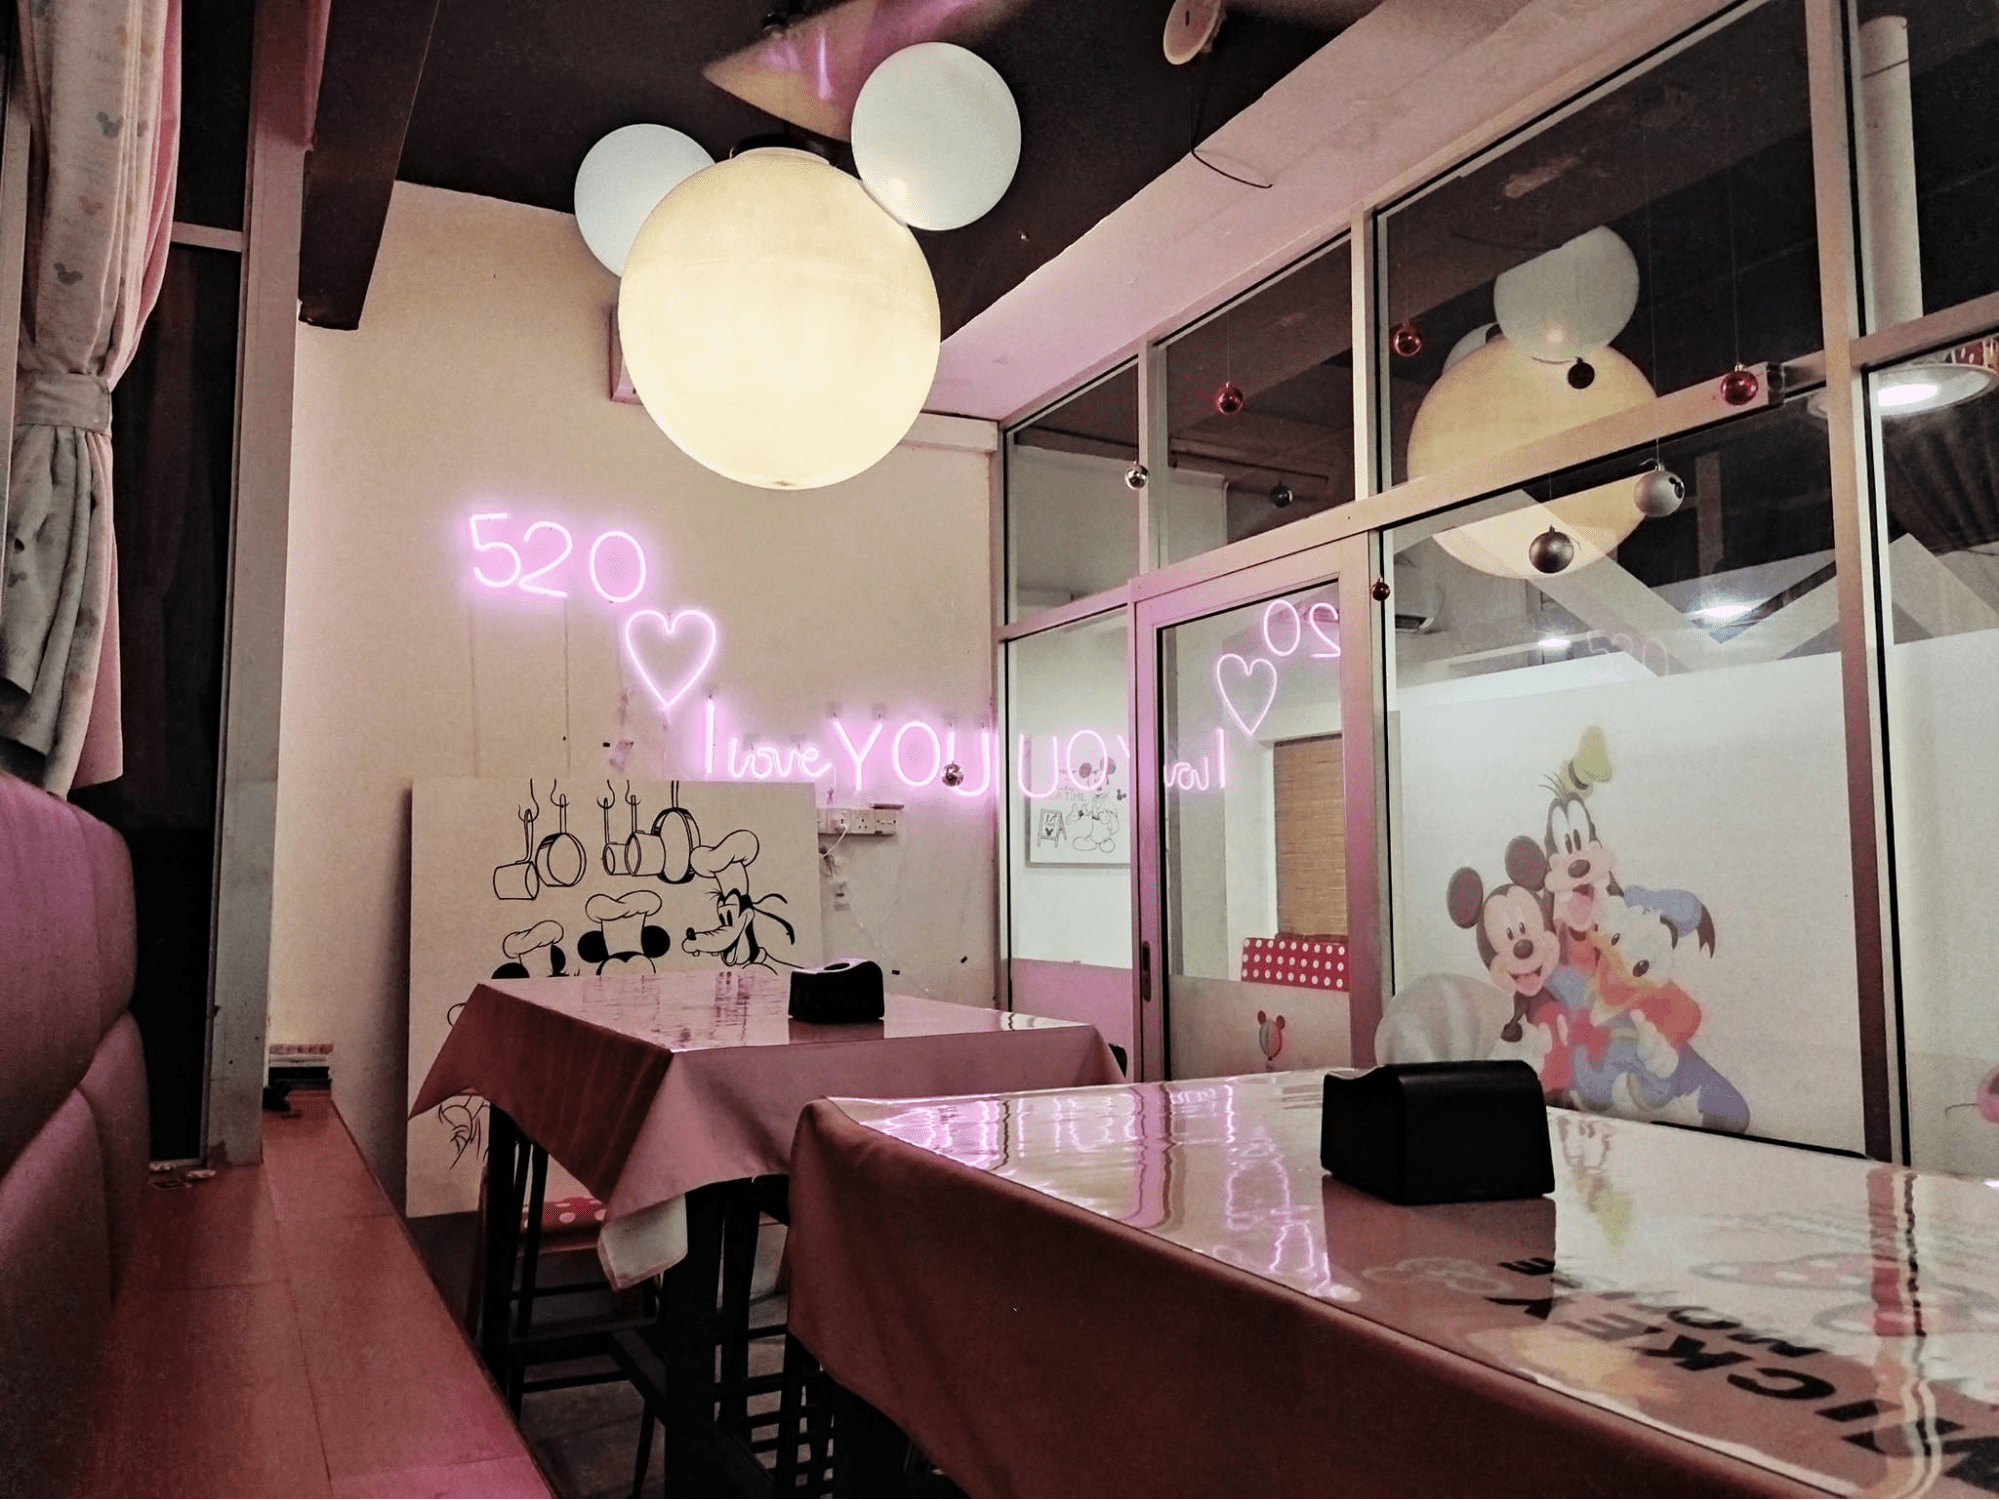 jb cafe guide - M2 Cafe interior